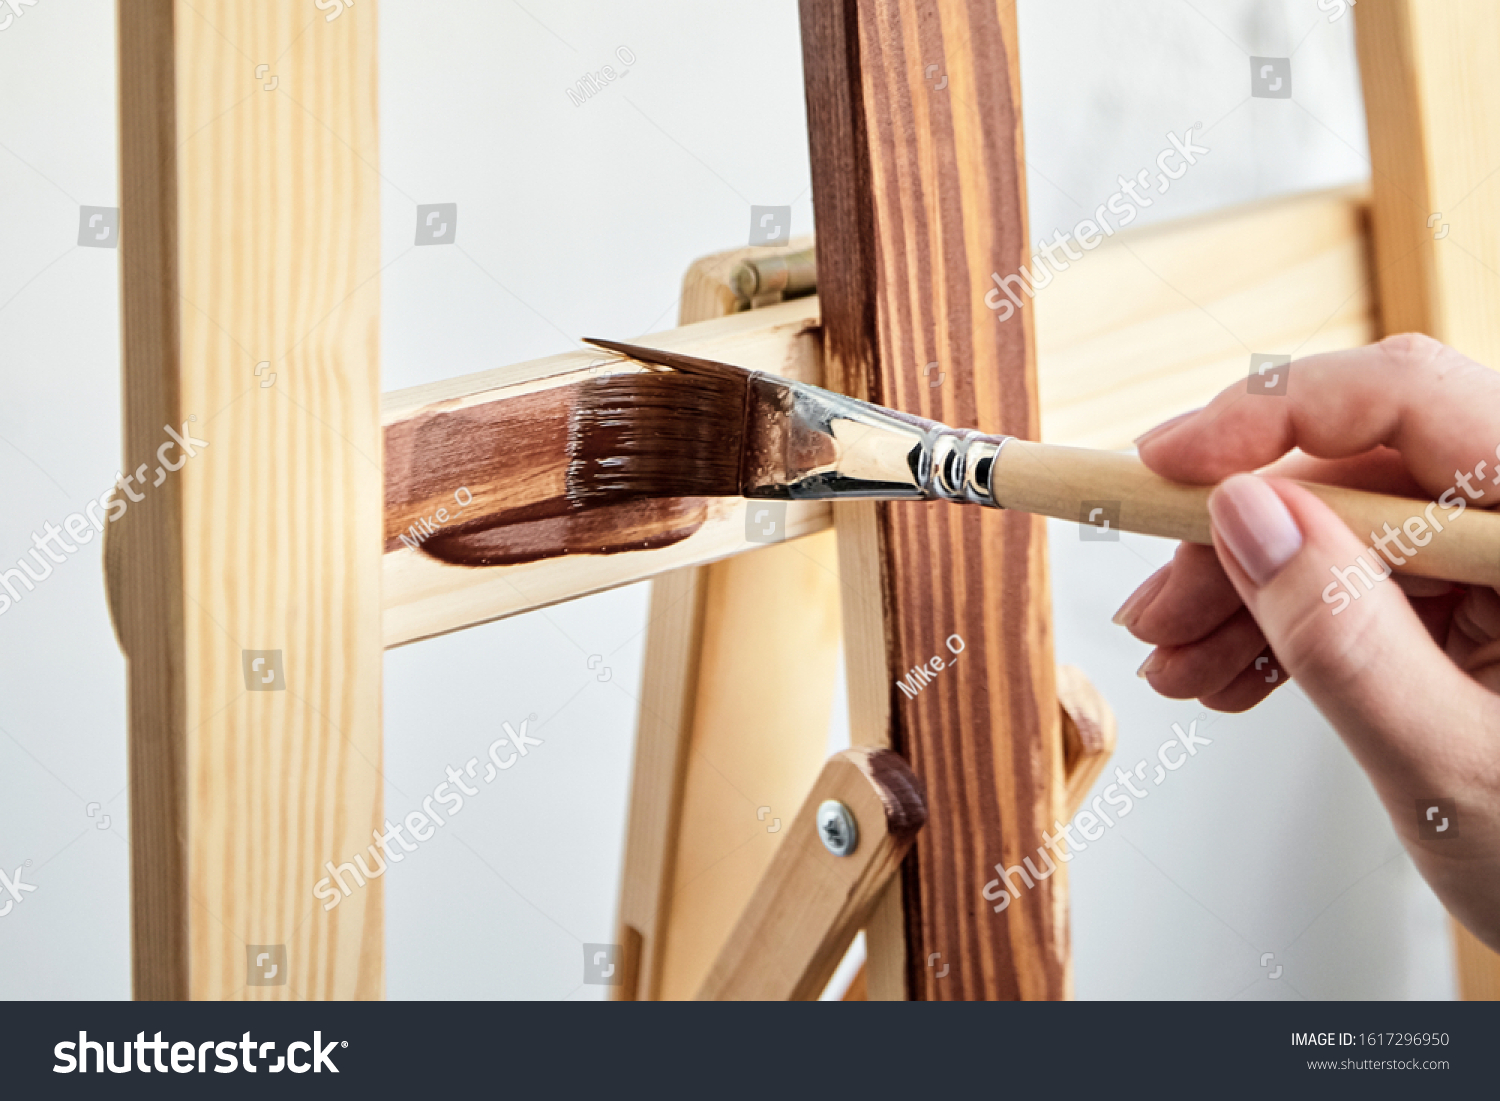 acrylic varnish for wood